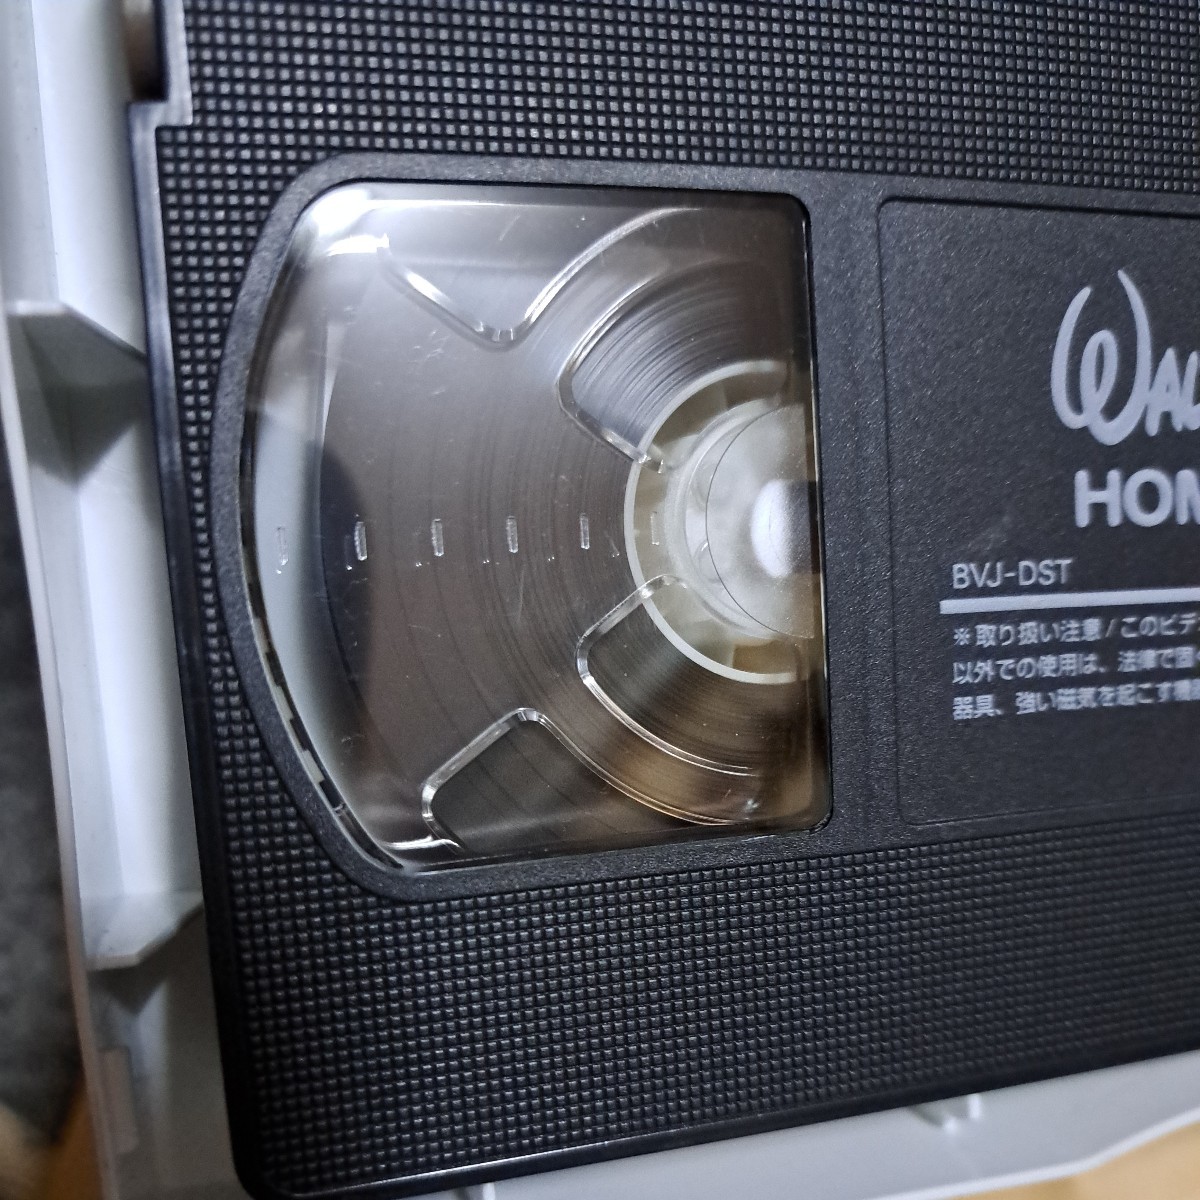  Disney anime Mulan Japanese dubbed version VHS videotape 